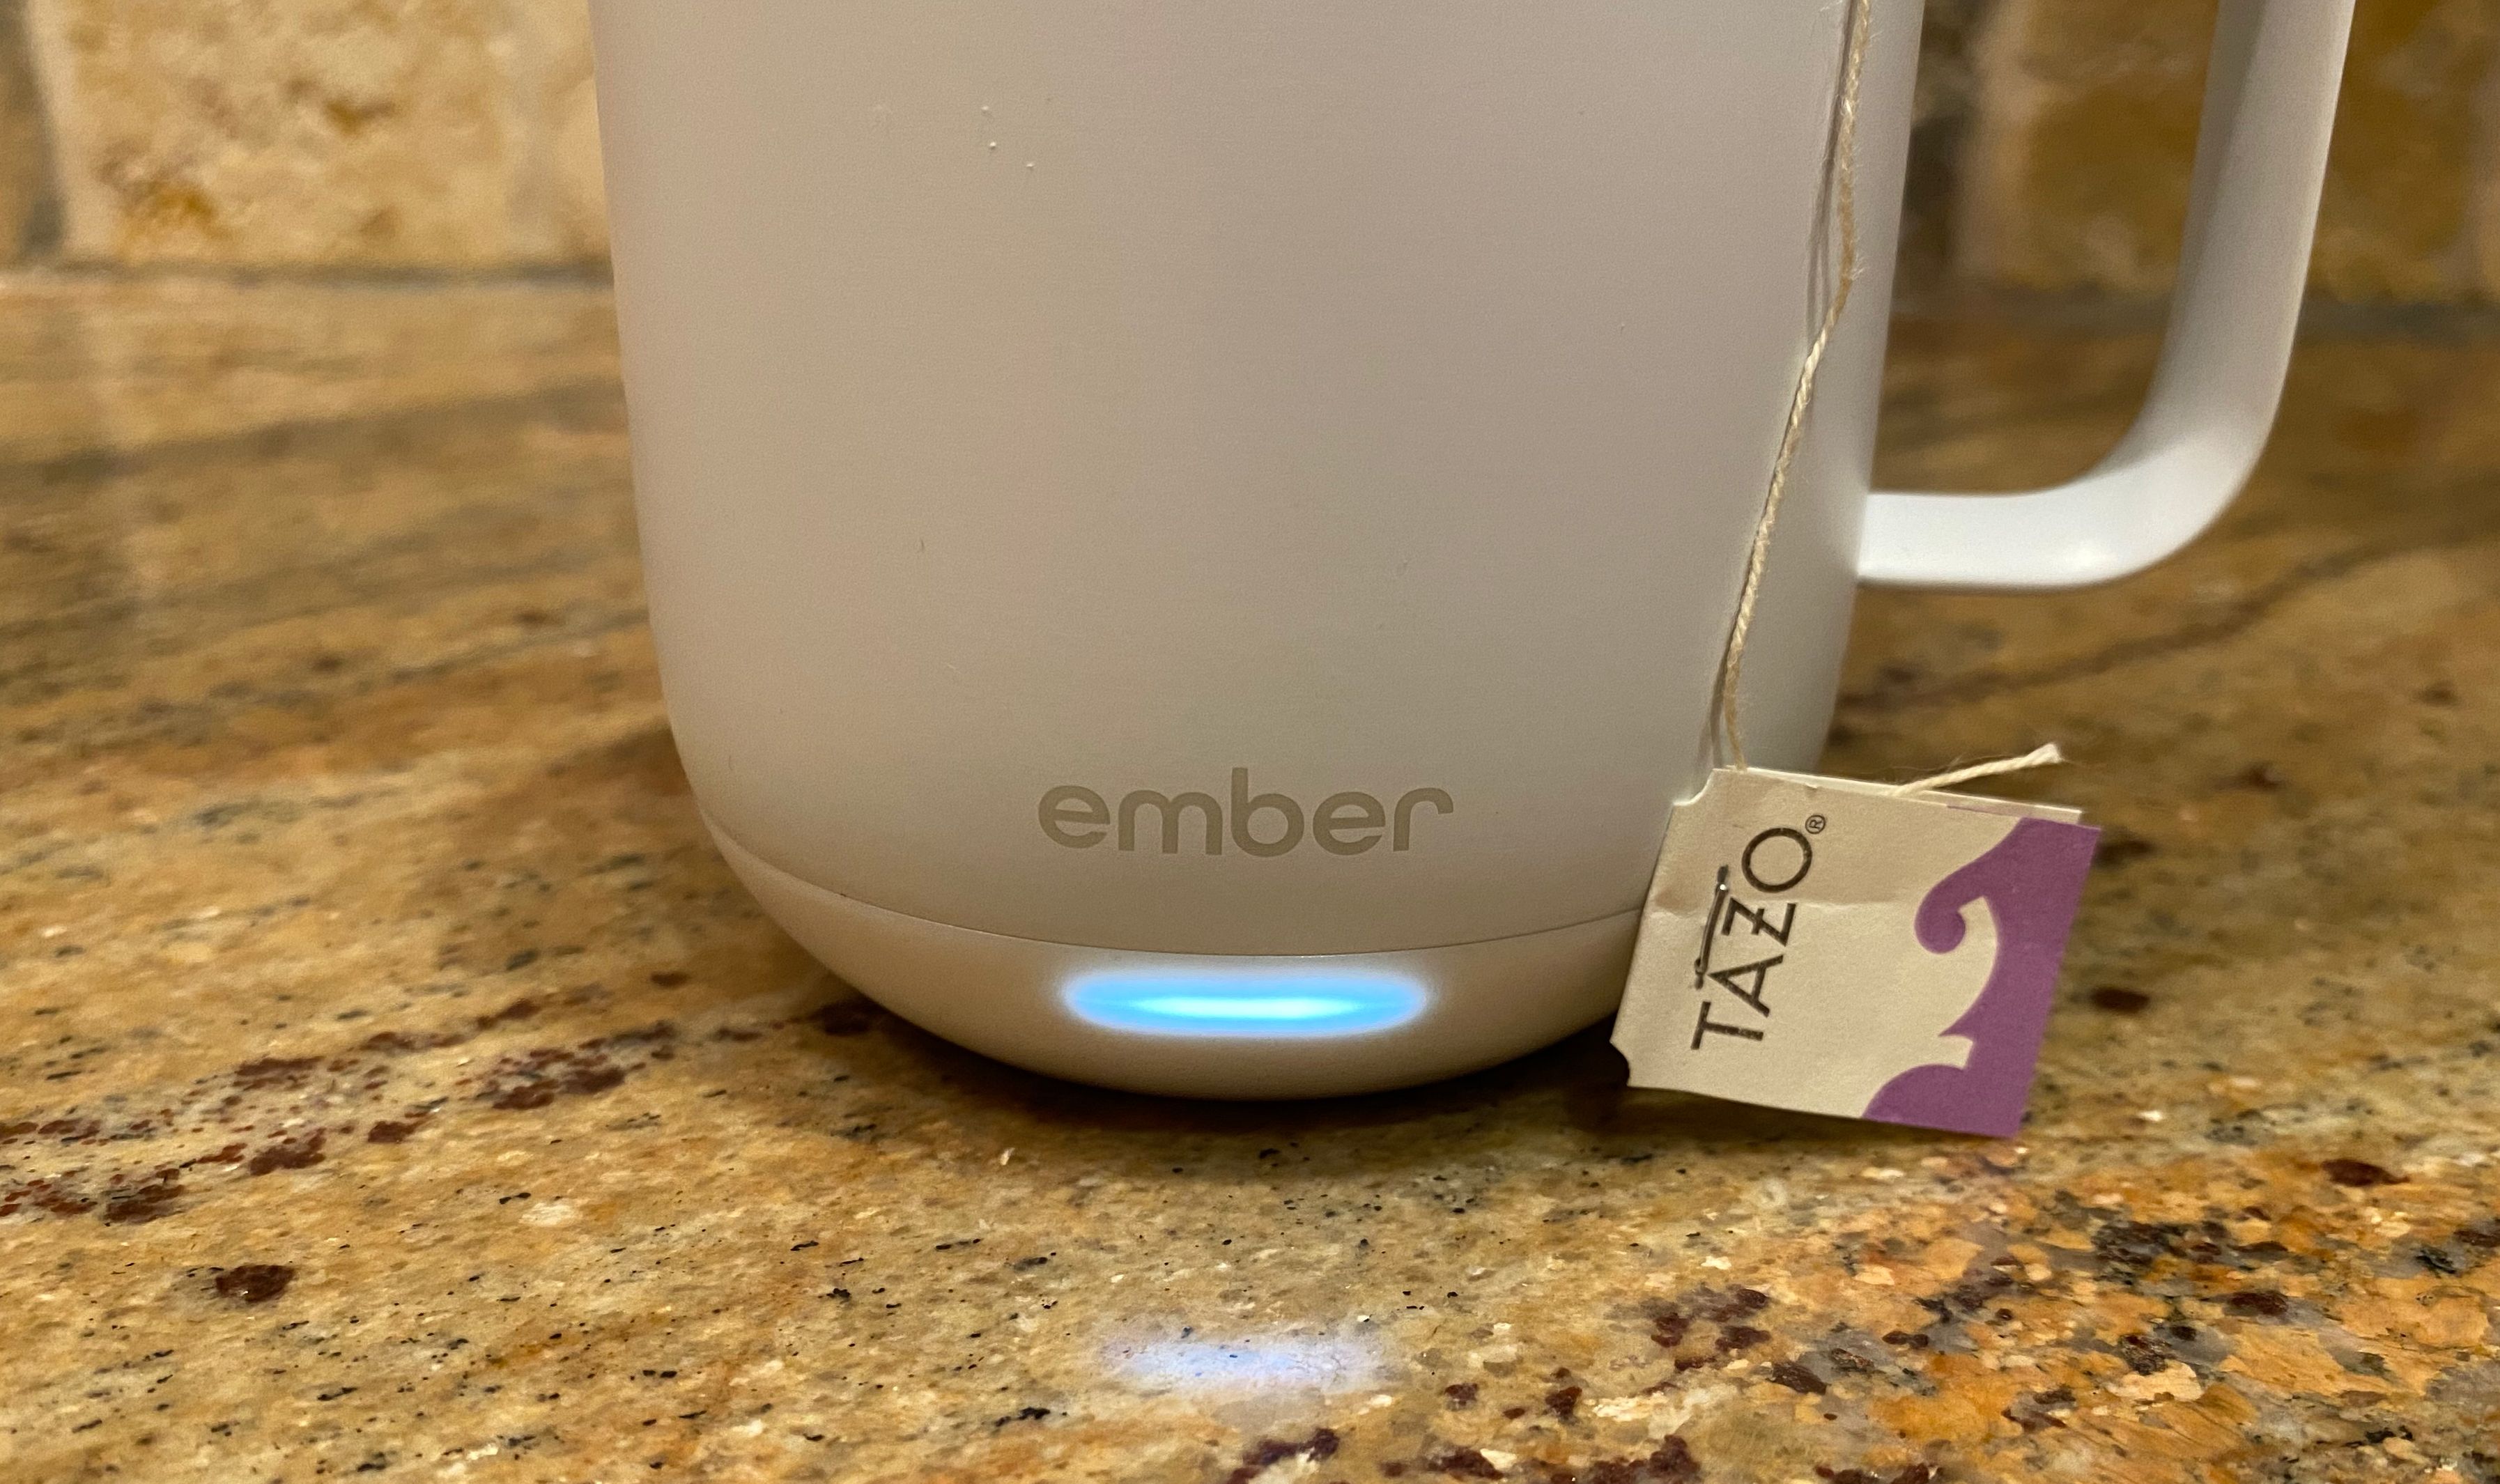 Ember Mug 2, Coffee Accessories